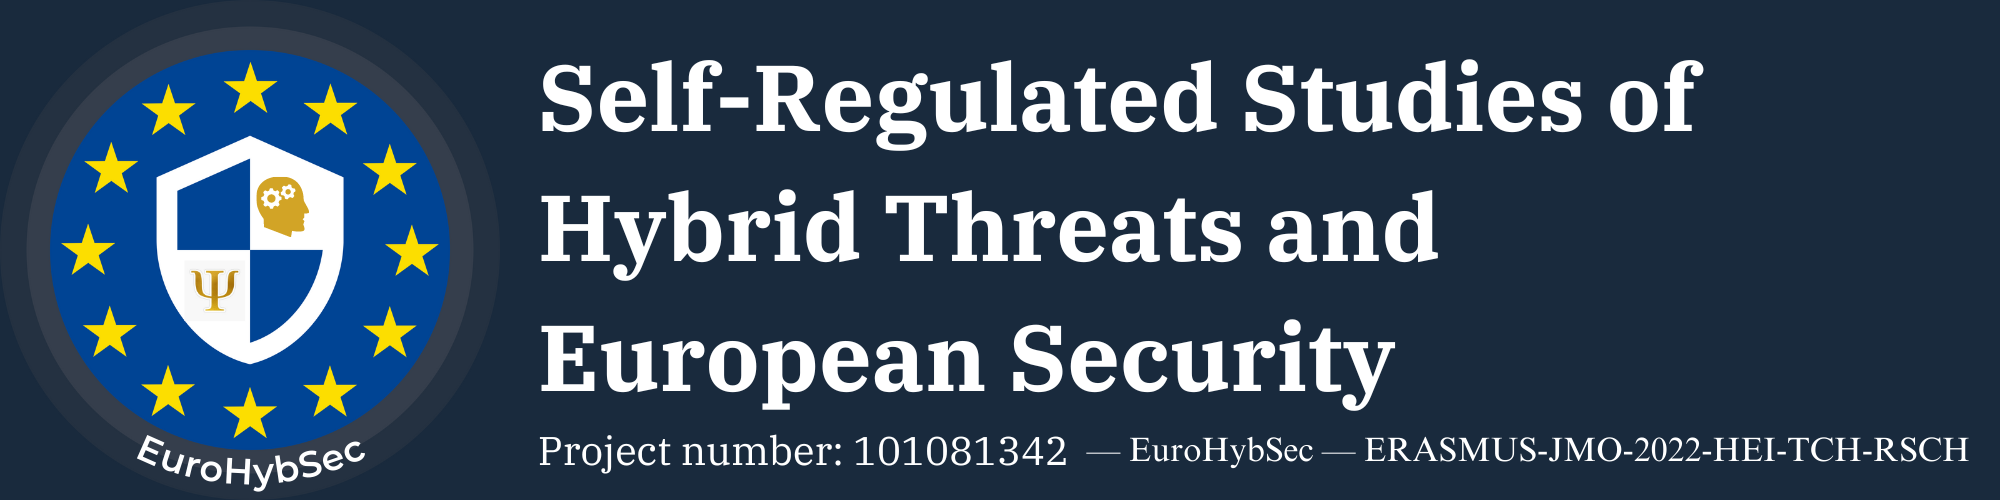 Self-Regulated Studies of Hybrid Threats and European Security